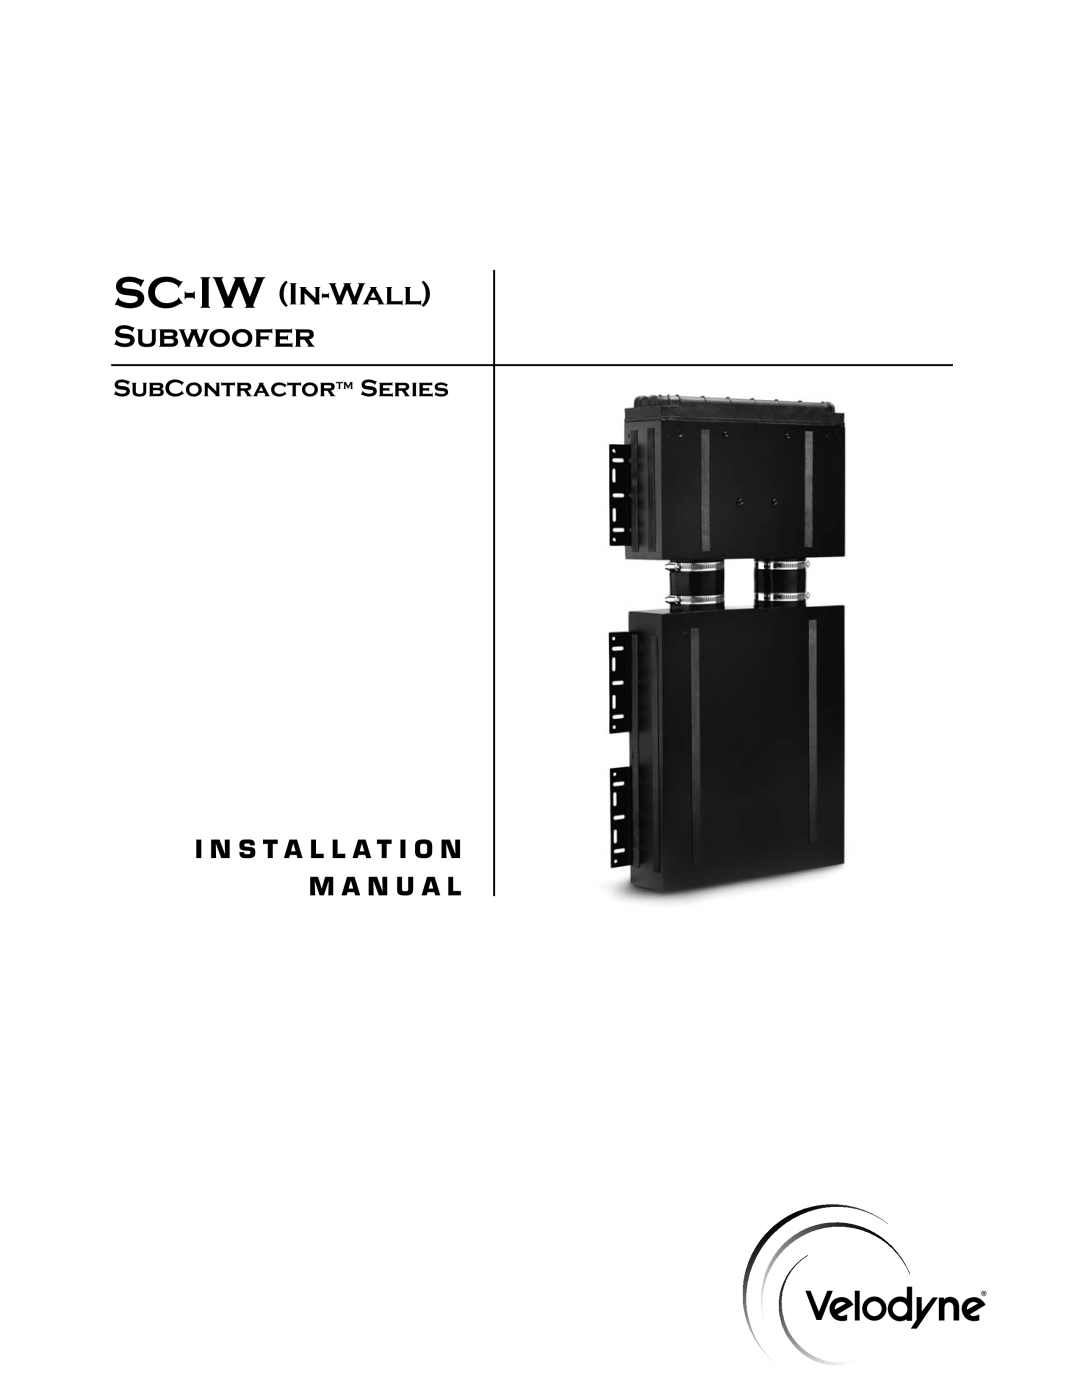 Velodyne Acoustics SC-1250 Amplifier, SC-8 user manual SubContractor Series, Amplifier Subwoofers, U S E R ’ S M A N U A L 